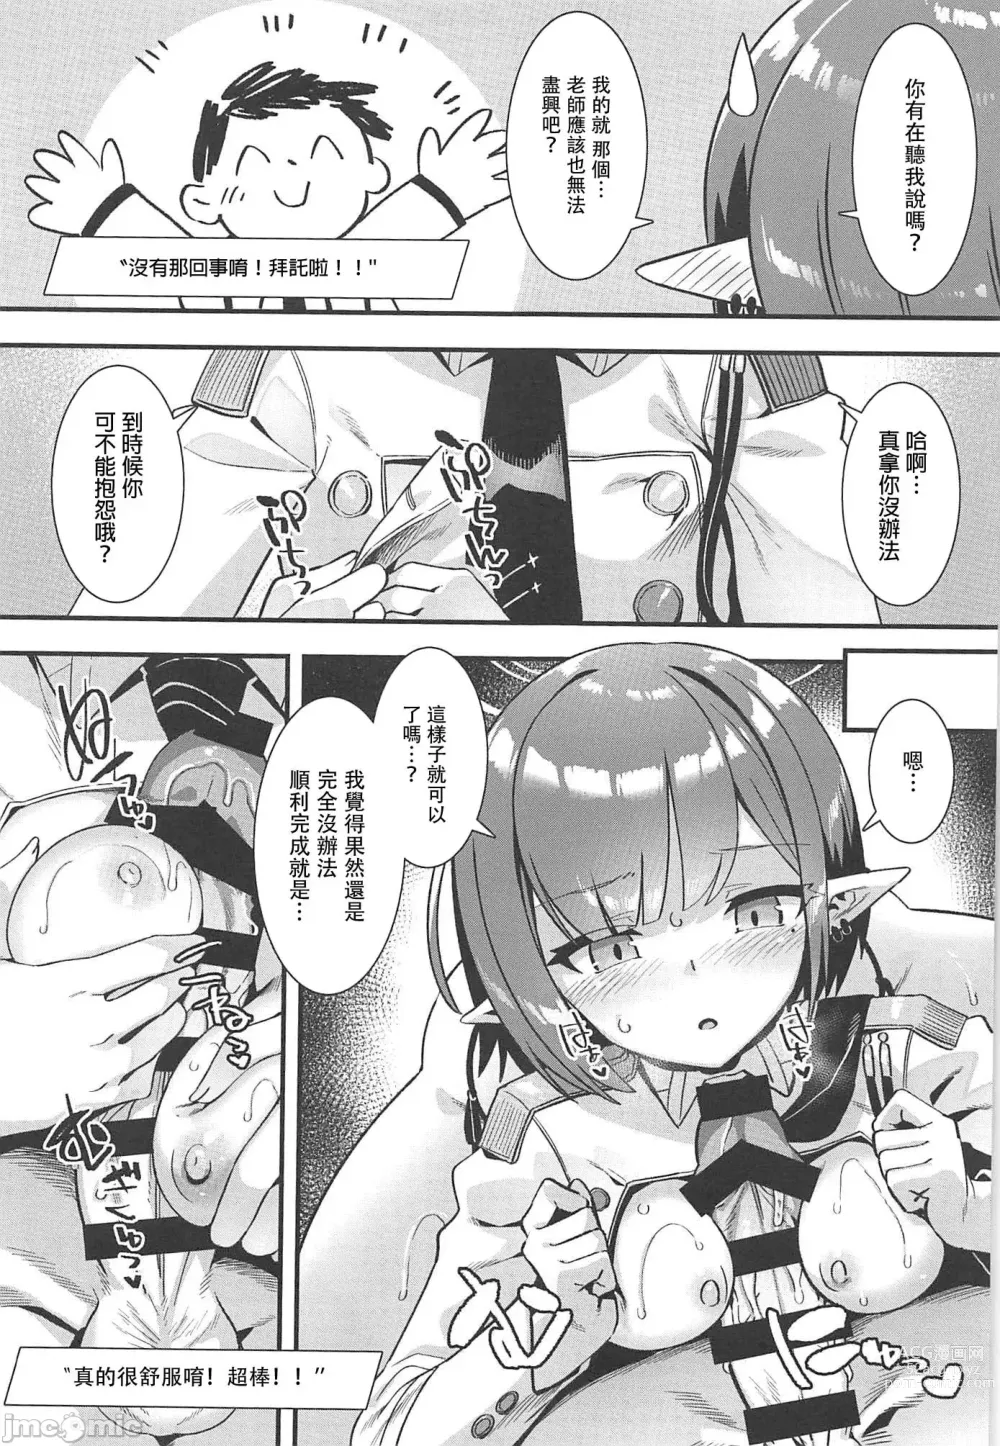 Page 8 of doujinshi Schale no Seiyoku Shori Gyoumu with Oki Aoi